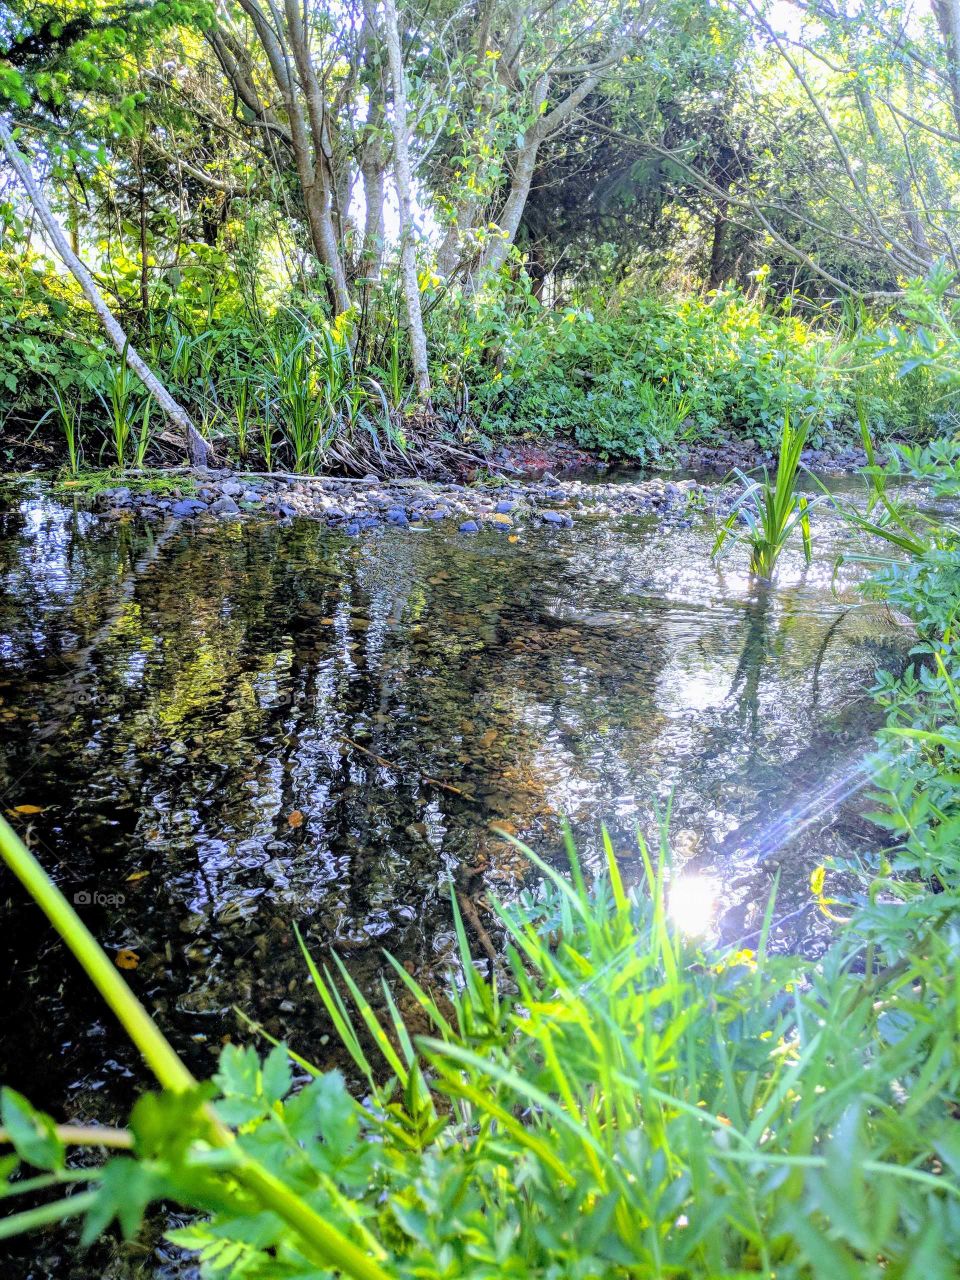 Shimmering stream in Oregon's lush green spring foliage.